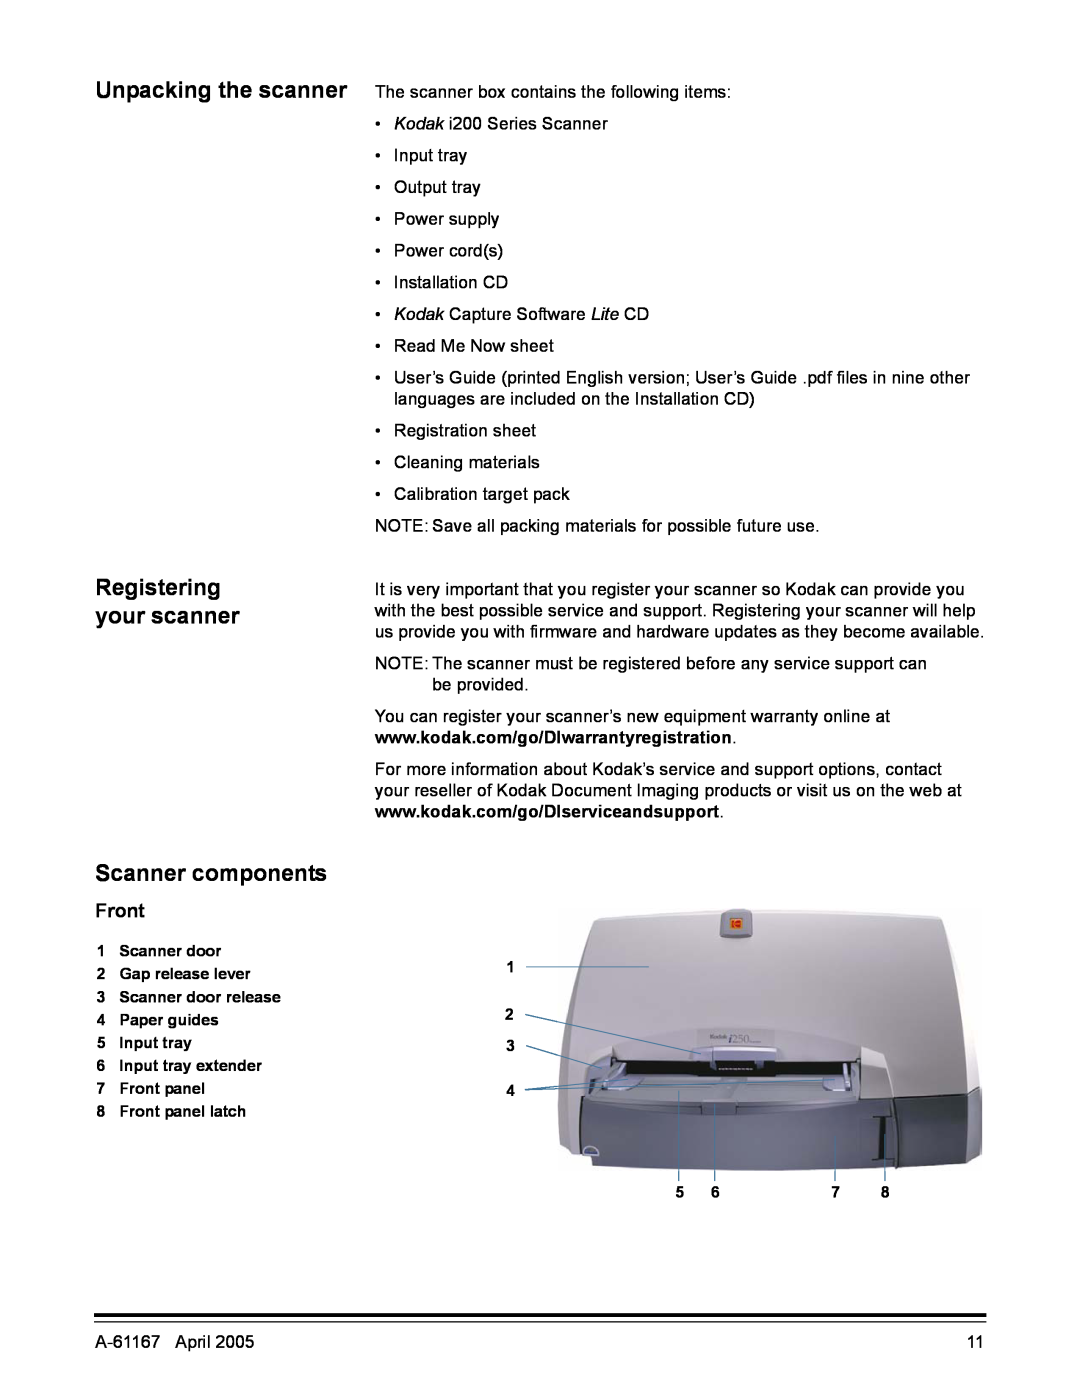 Kodak A-61167 manual Unpacking the scanner Registering your scanner, Scanner components, Front 